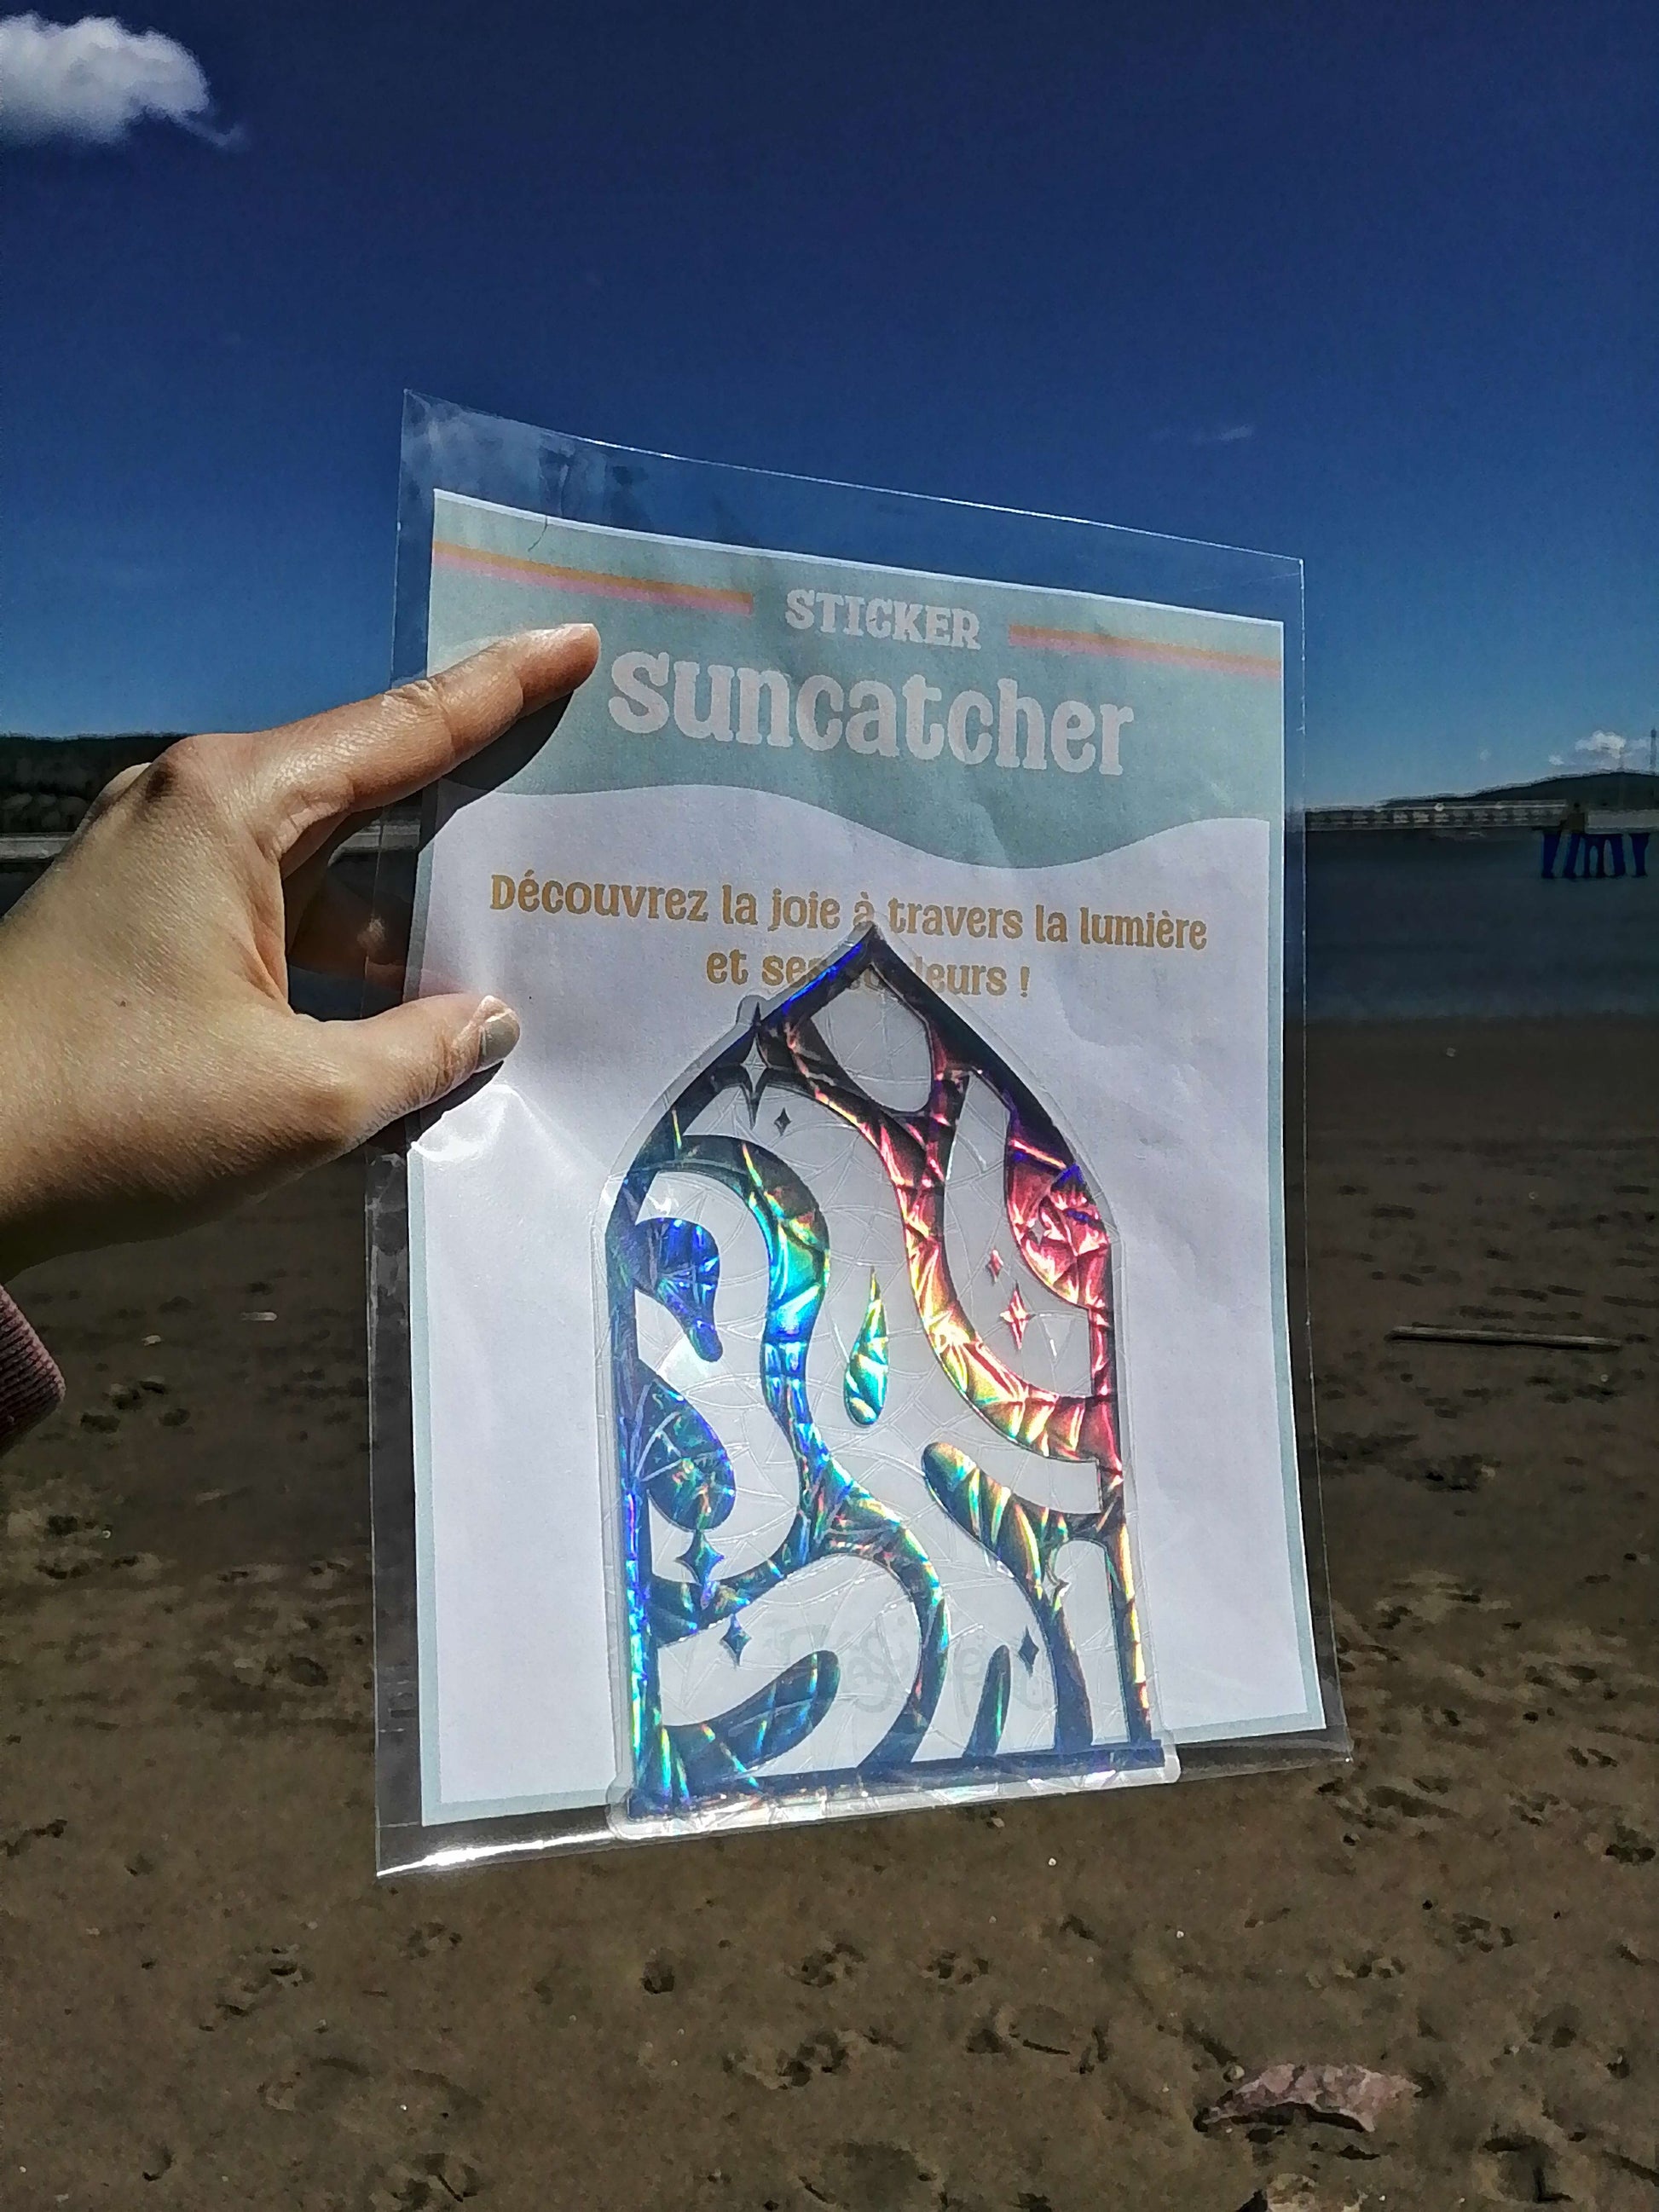 Window sticker suncatcher